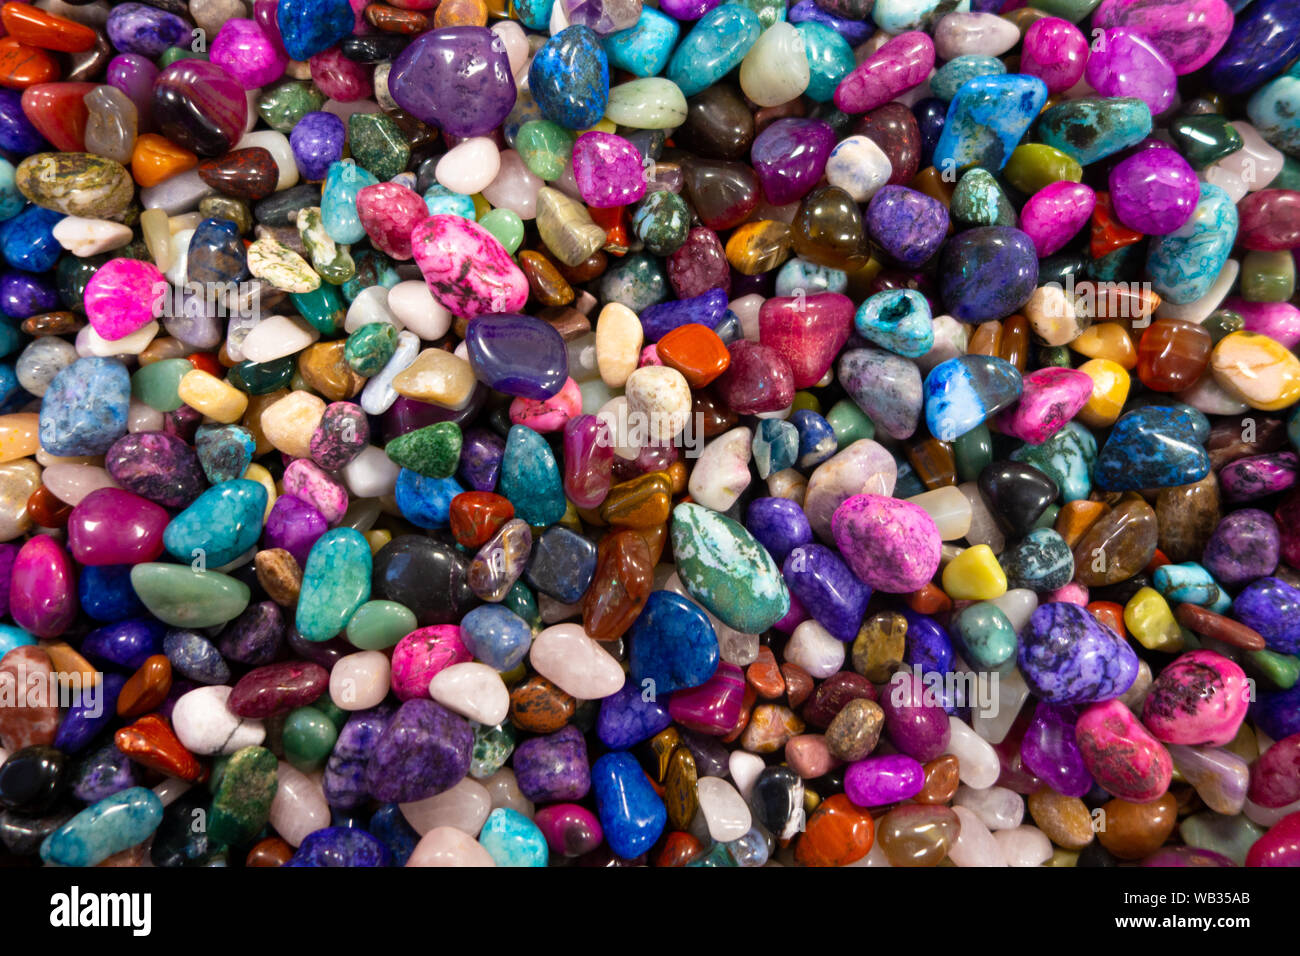 A large amount of colorful polished stones background Stock Photo